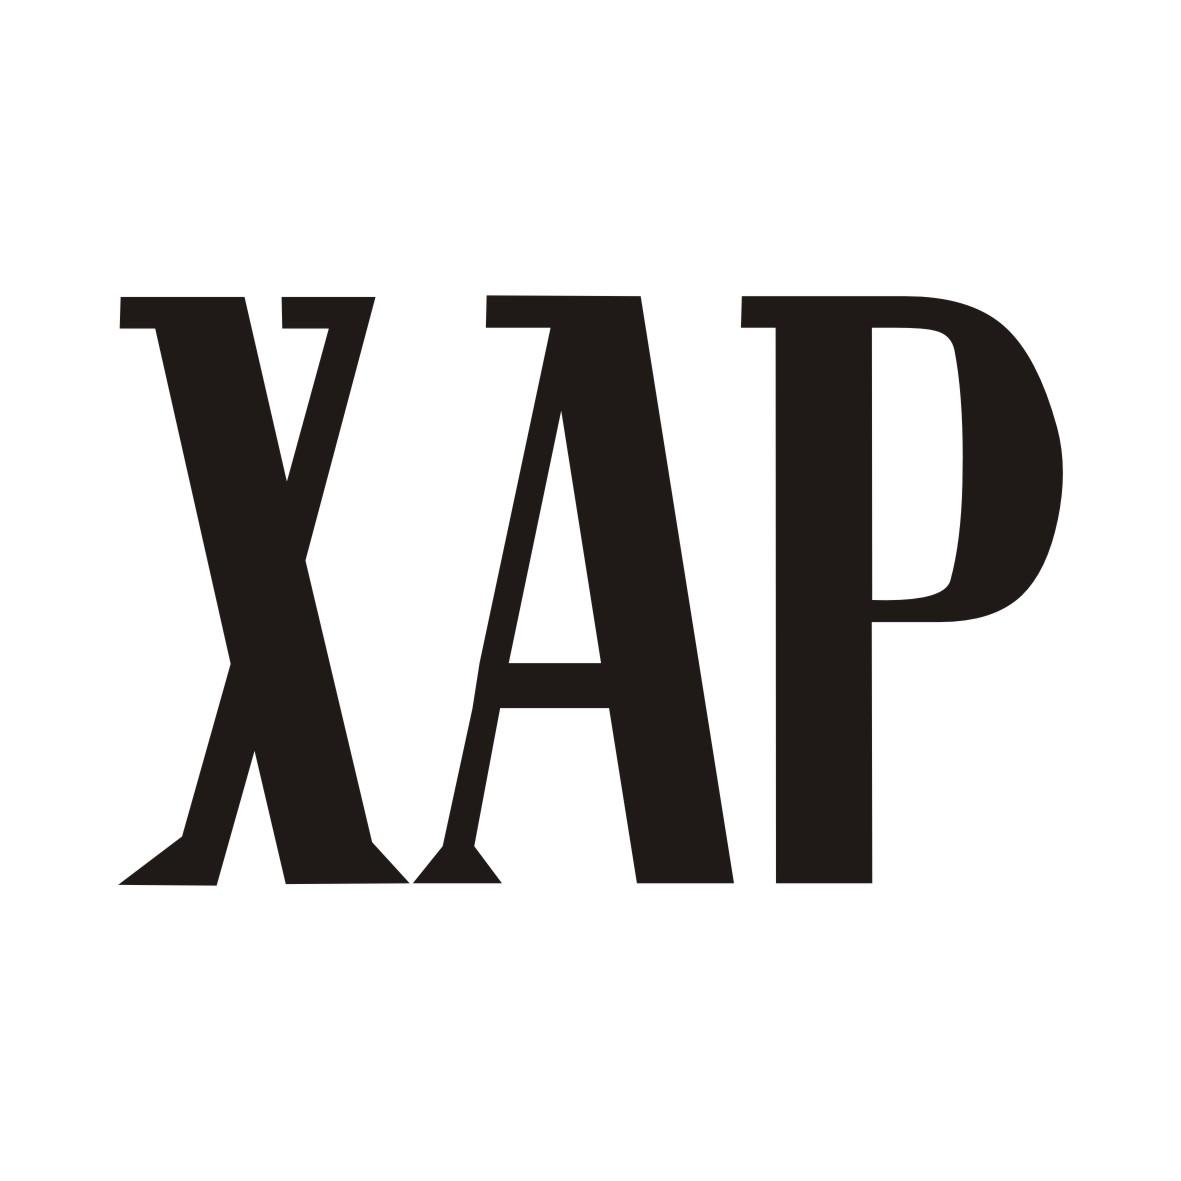 XAP商标转让